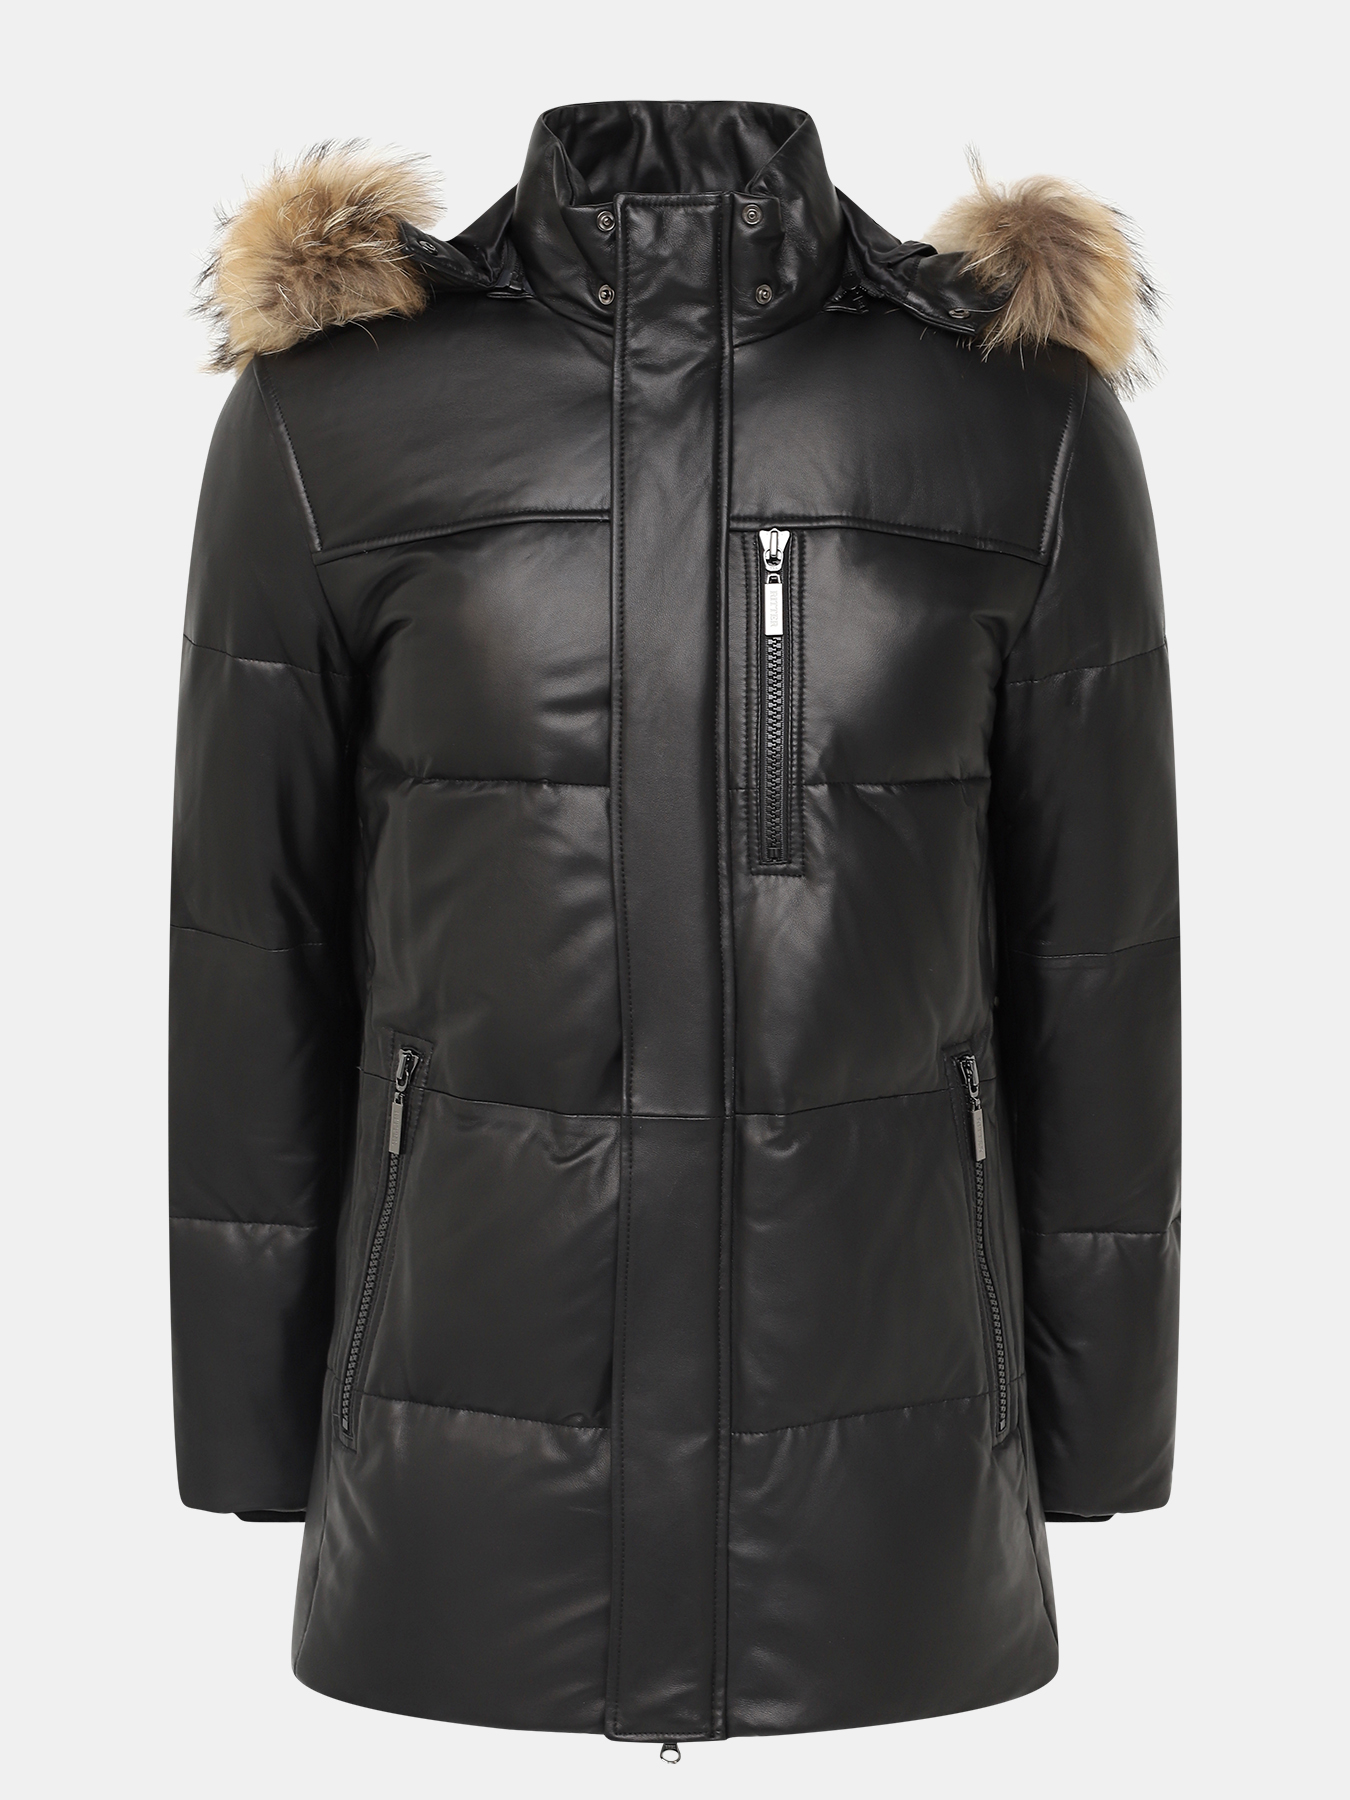 Кожаная куртка Ritter 390990-031, цвет черный, размер 60 - фото 1